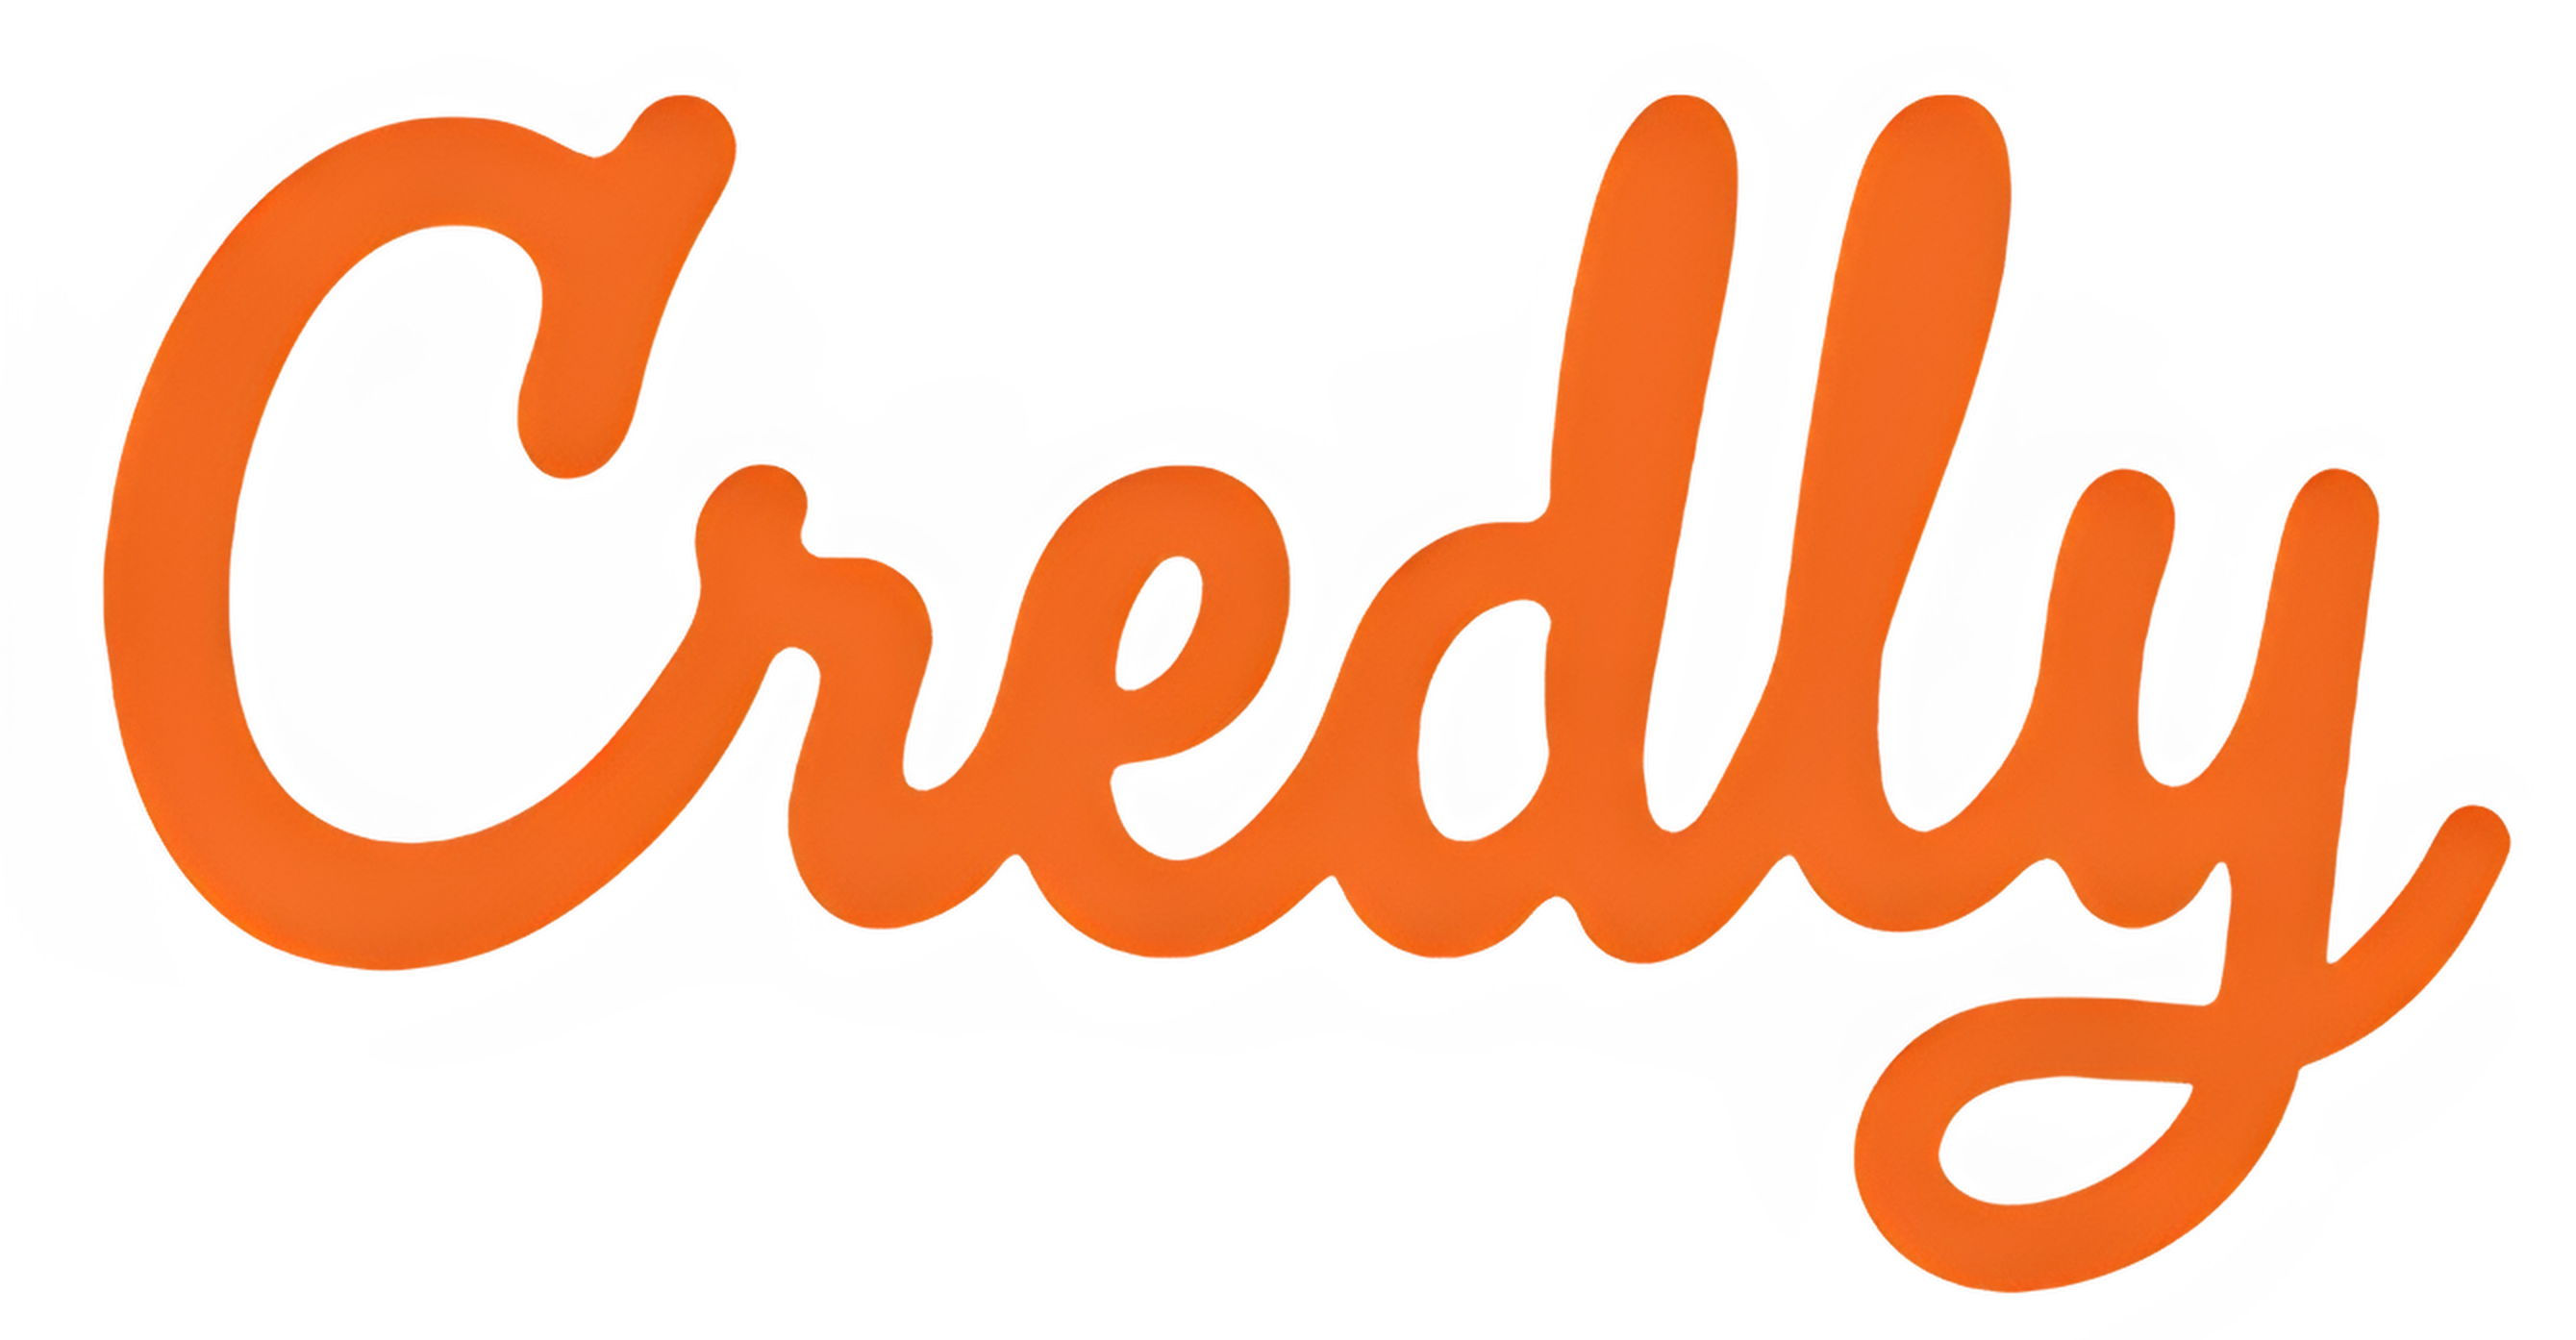 Credly client logo